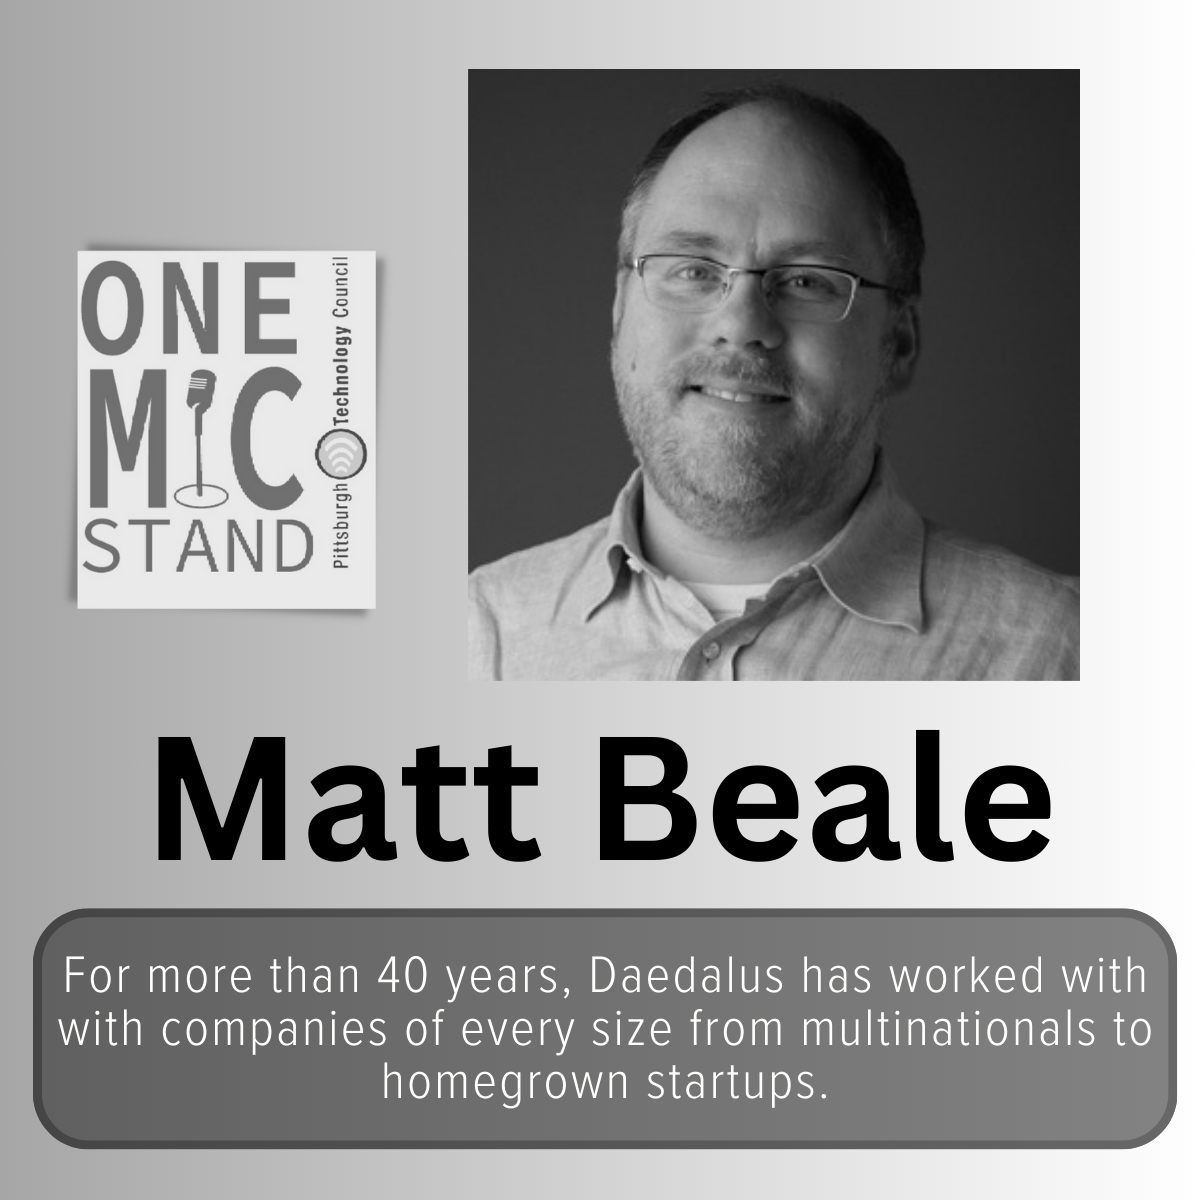 One Mic Stand: Matt Beale Talks About Daedalus' Design DNA